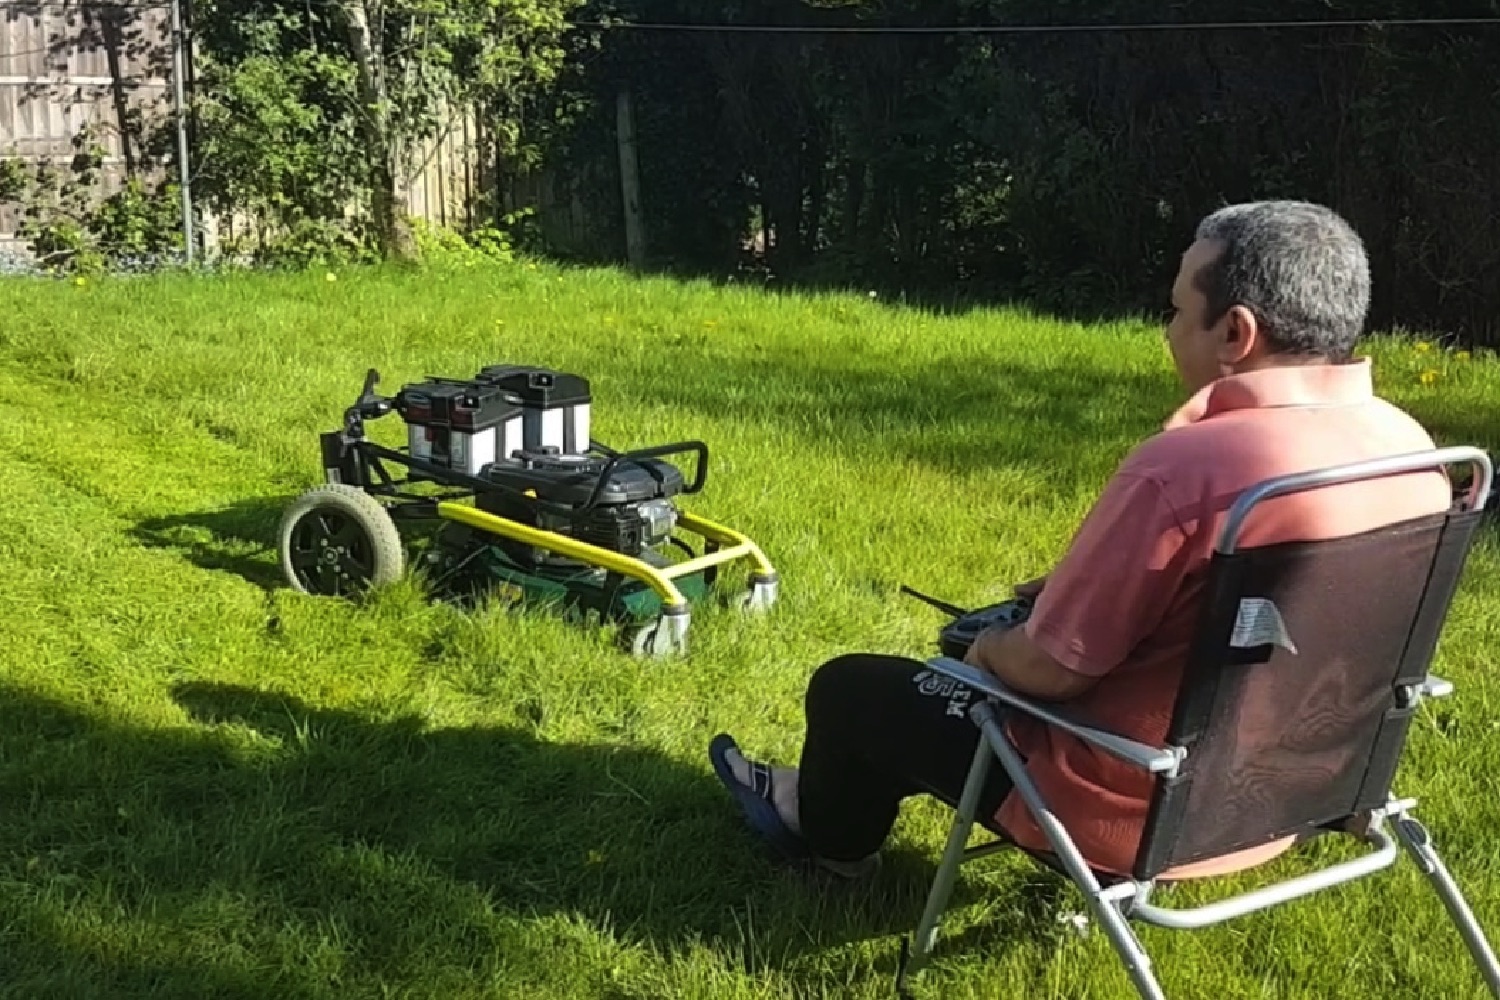 rc lawnmower kickstarter lawn chair image 3